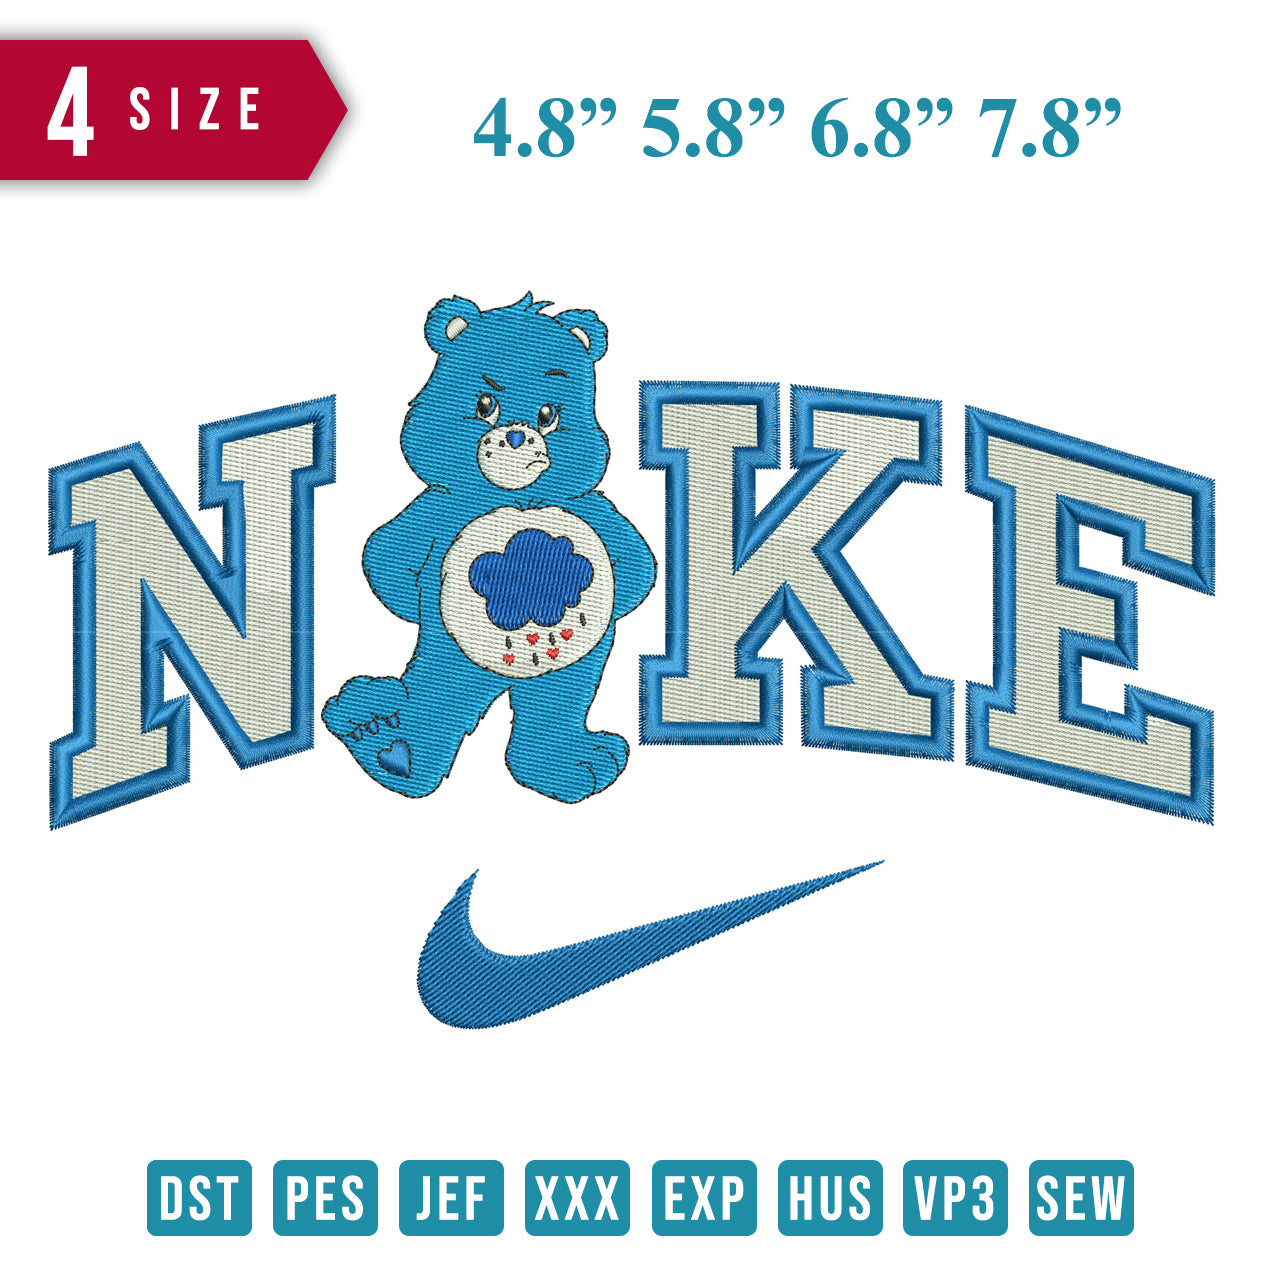 Nike Grumpy Bear